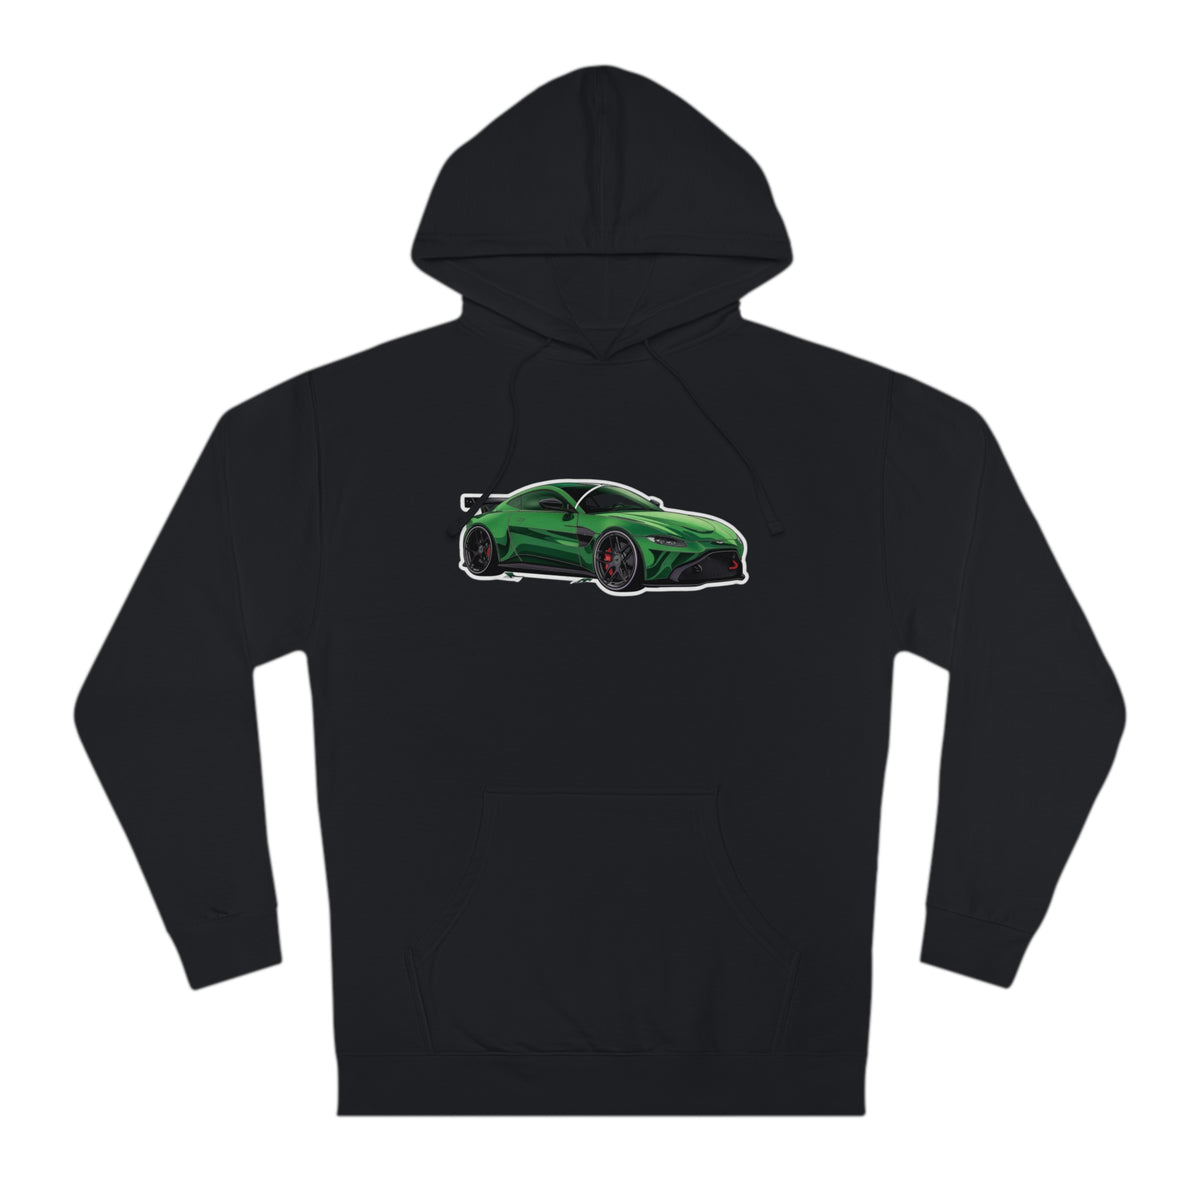 Emerald Velocity Men's Hoodie with Aston Martin Graphic Hooded Sweatshirt